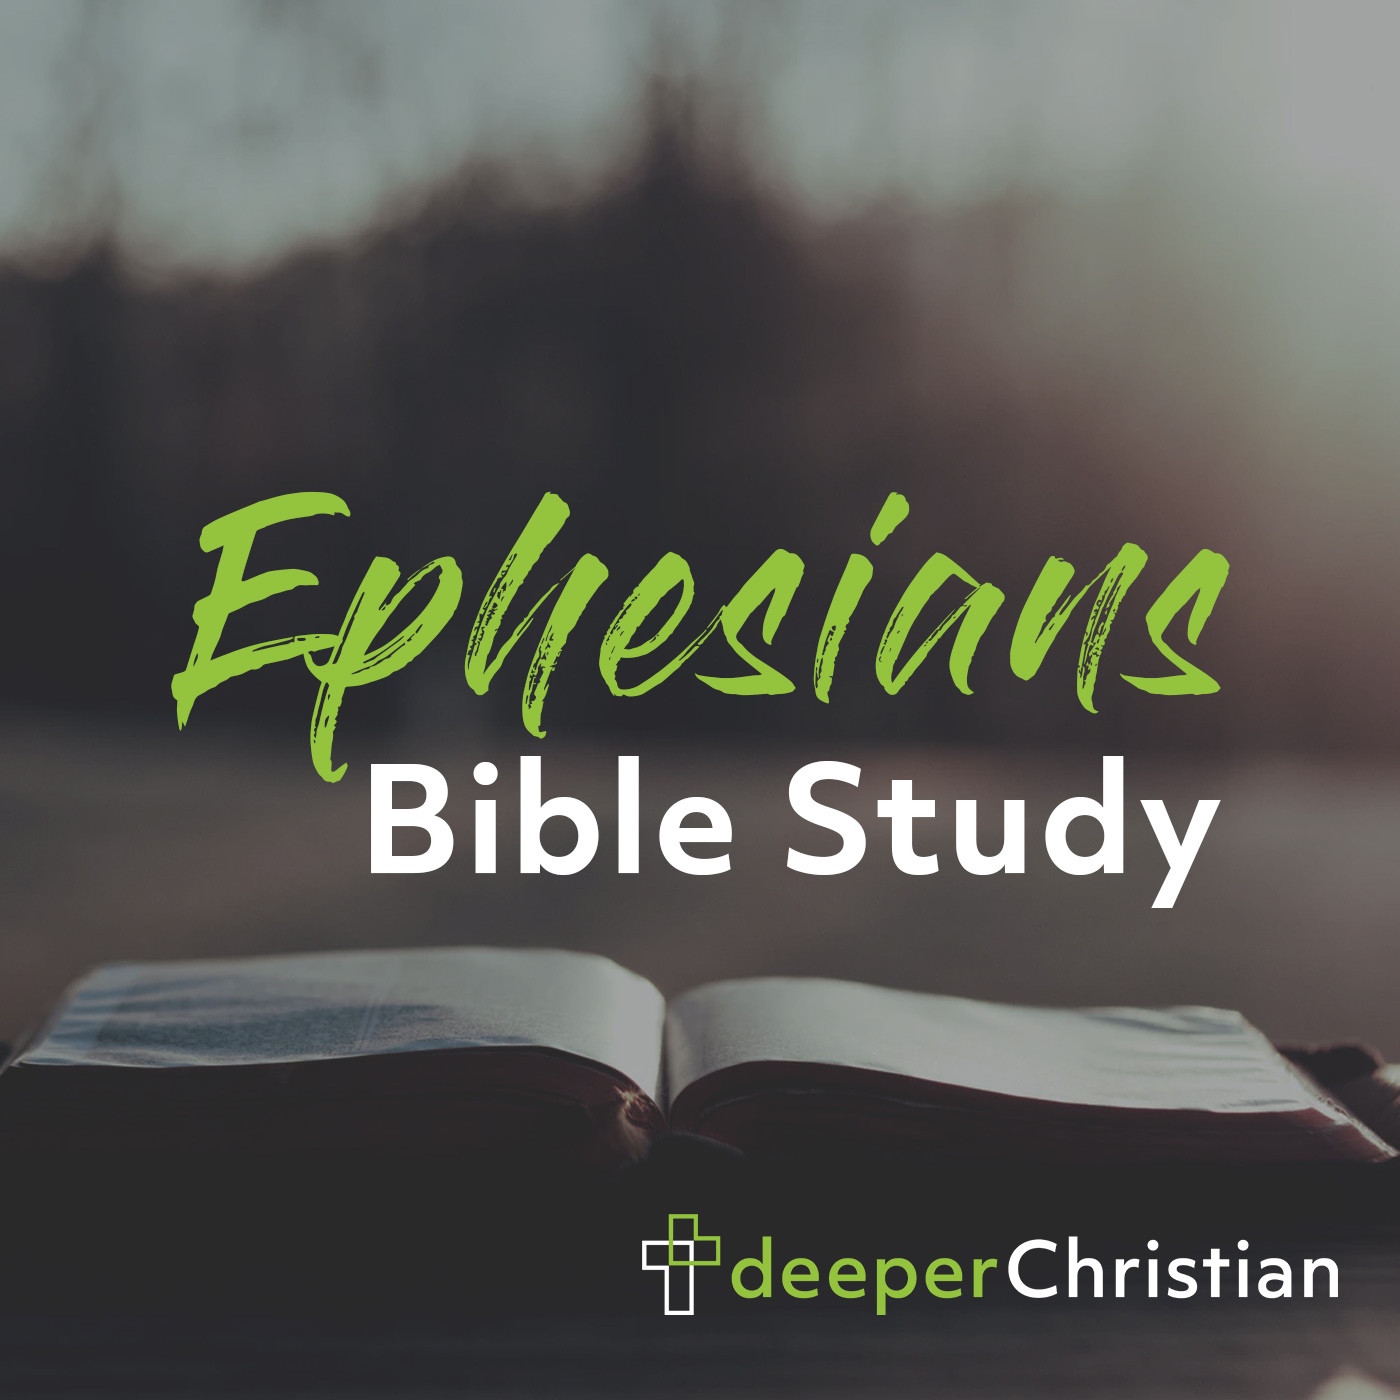 Artwork for Deeper Christian Bible Study in Ephesians